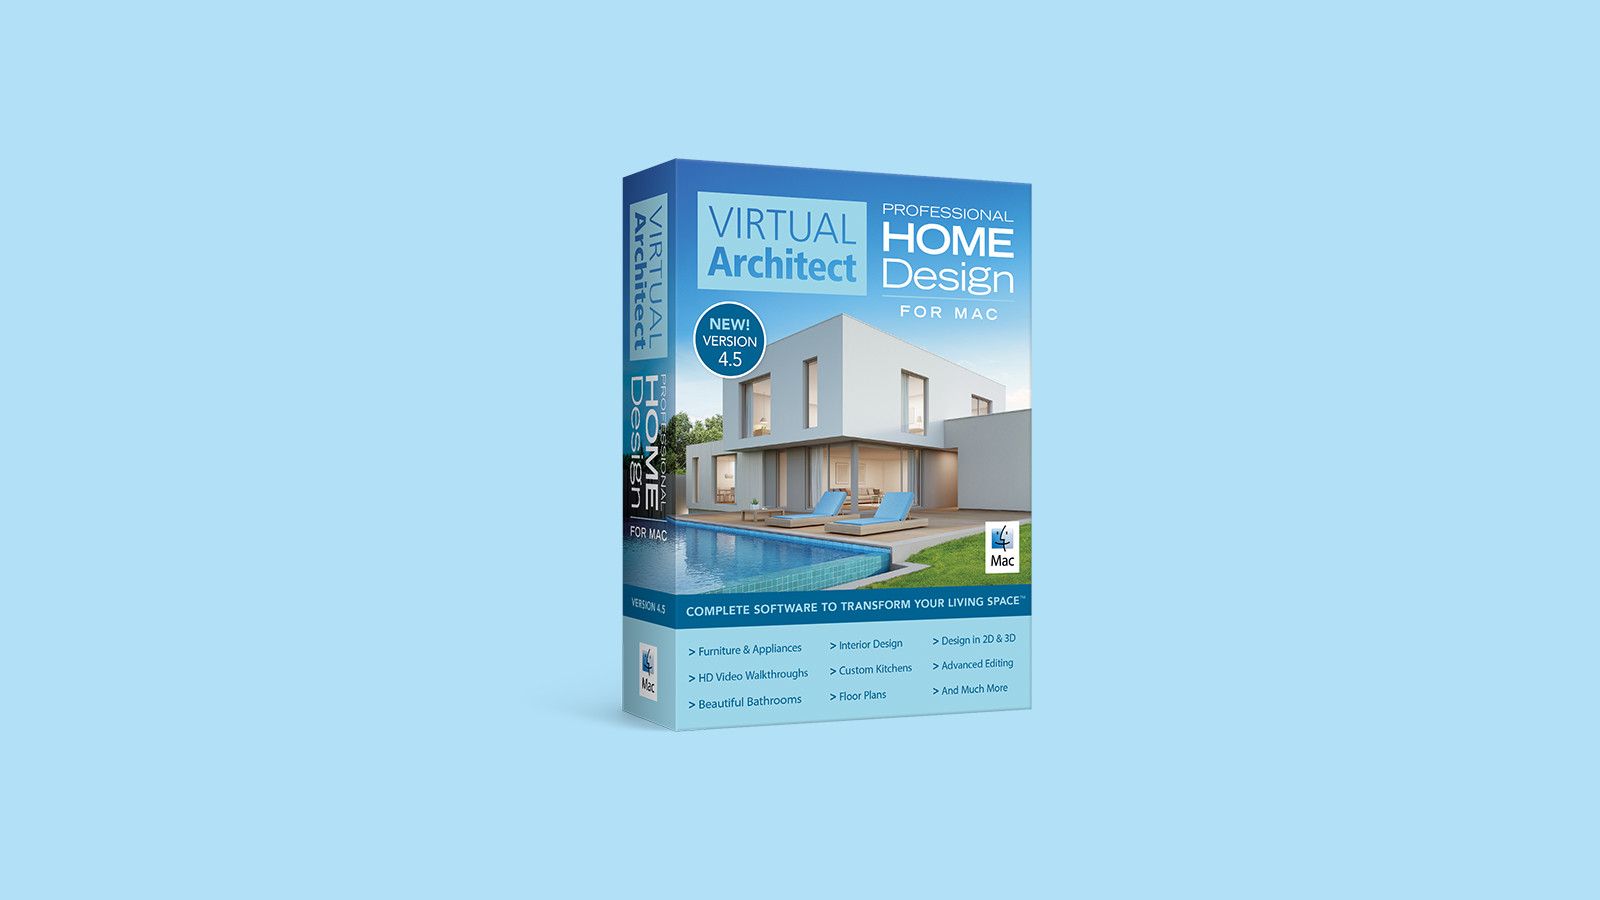 Virtual Architect Professional Home Design For Mac CD Key